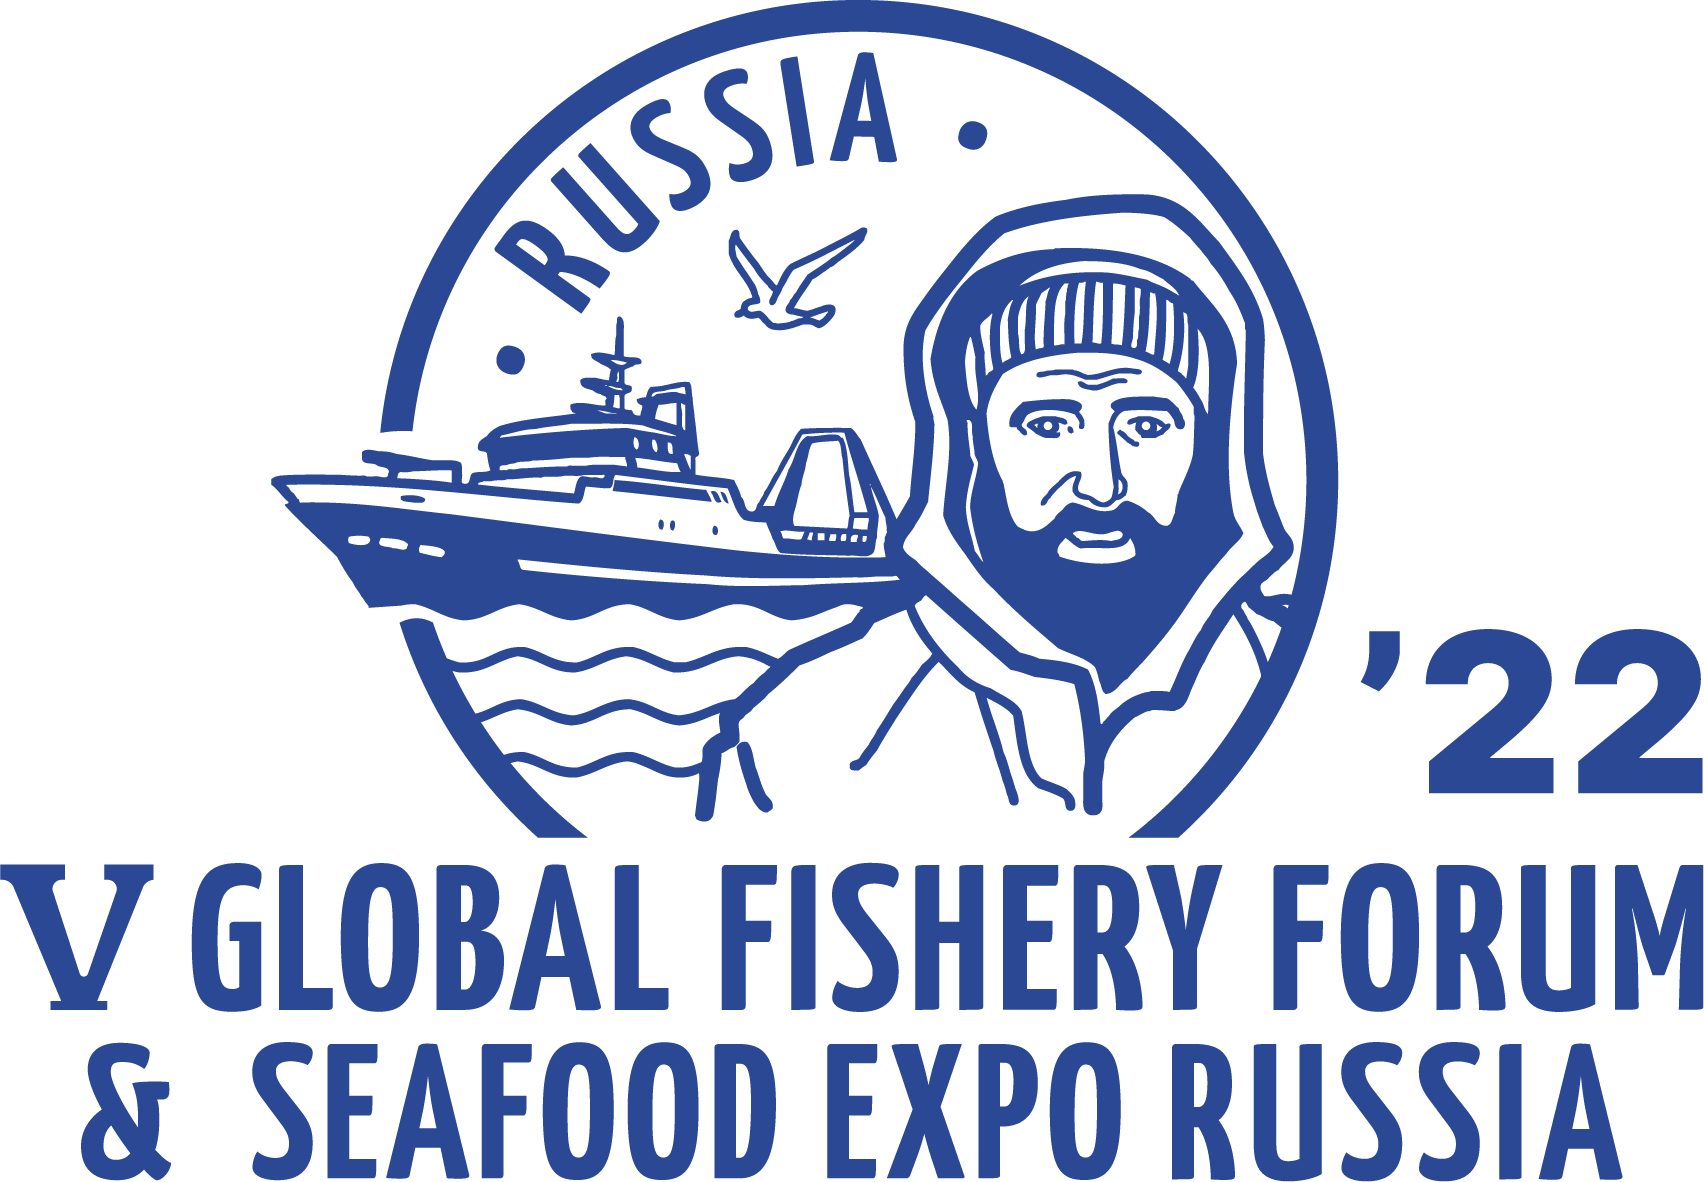 Seafood expo. Global Fishery forum & Seafood Expo Russia. Seafood Expo Russia 2023. Seafood Expo Russia 2022 лого. V Международный рыбопромышленный форум 2022.